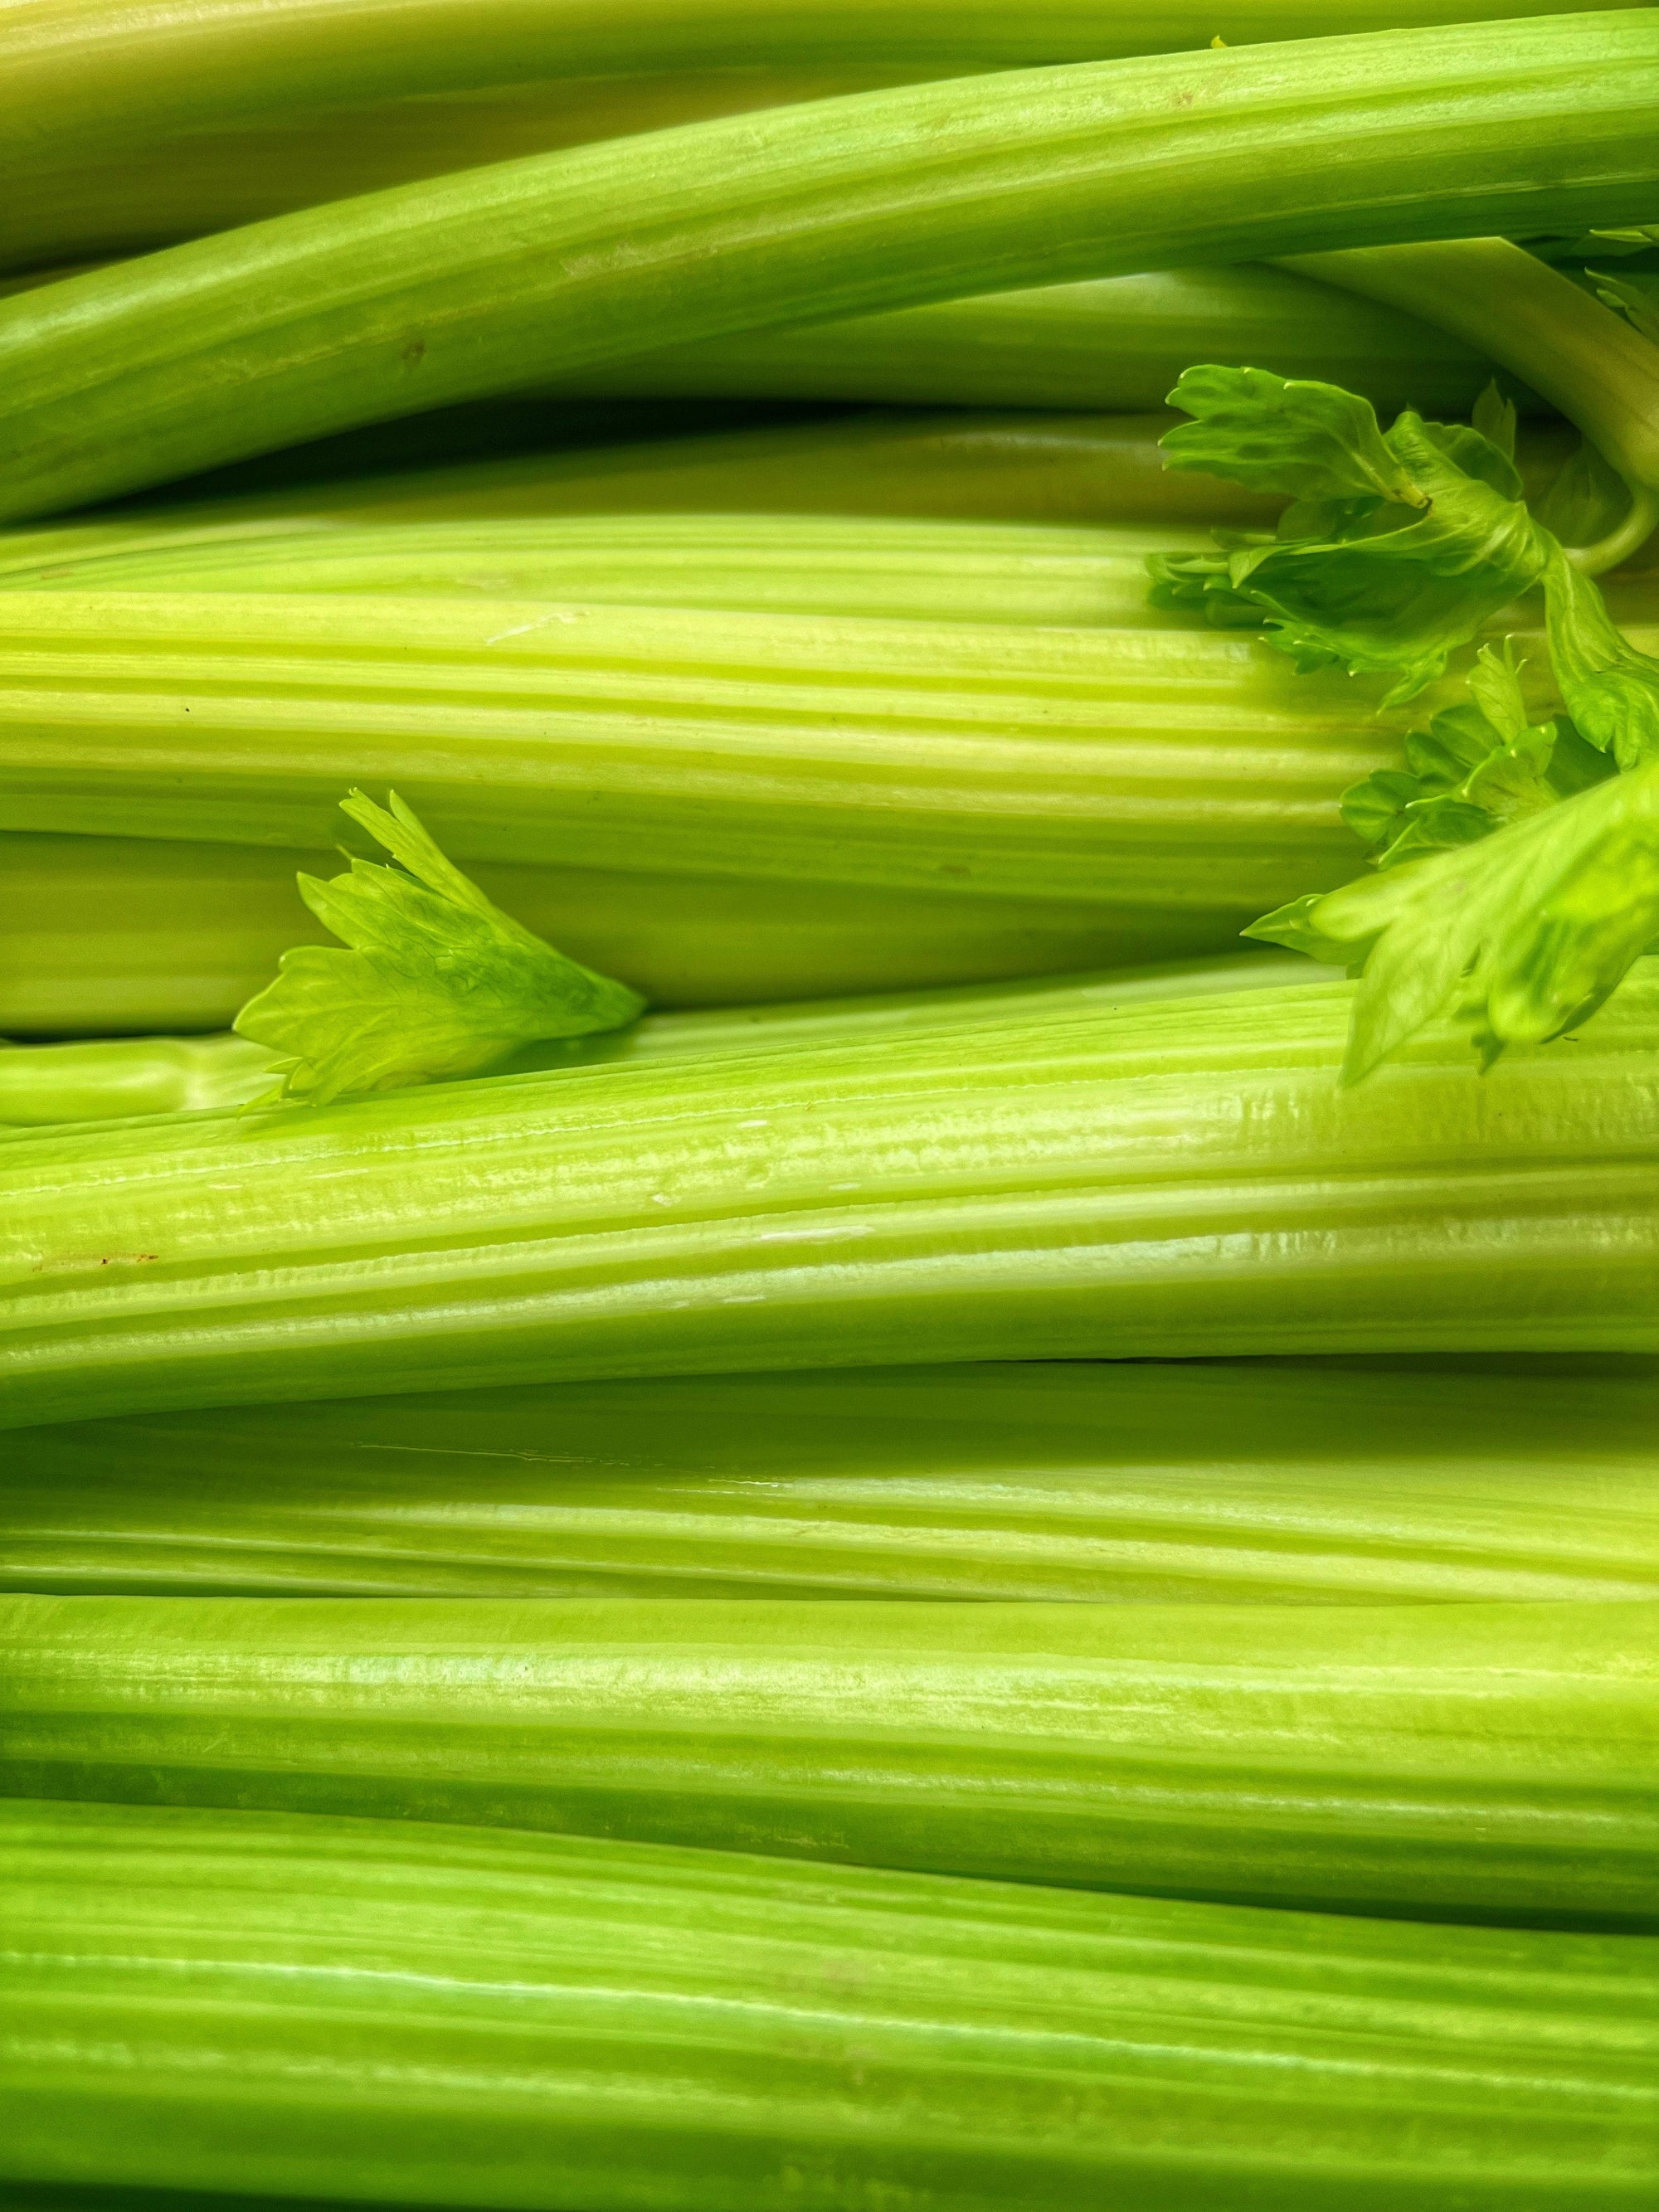 The Good Root 100% Celery Juice